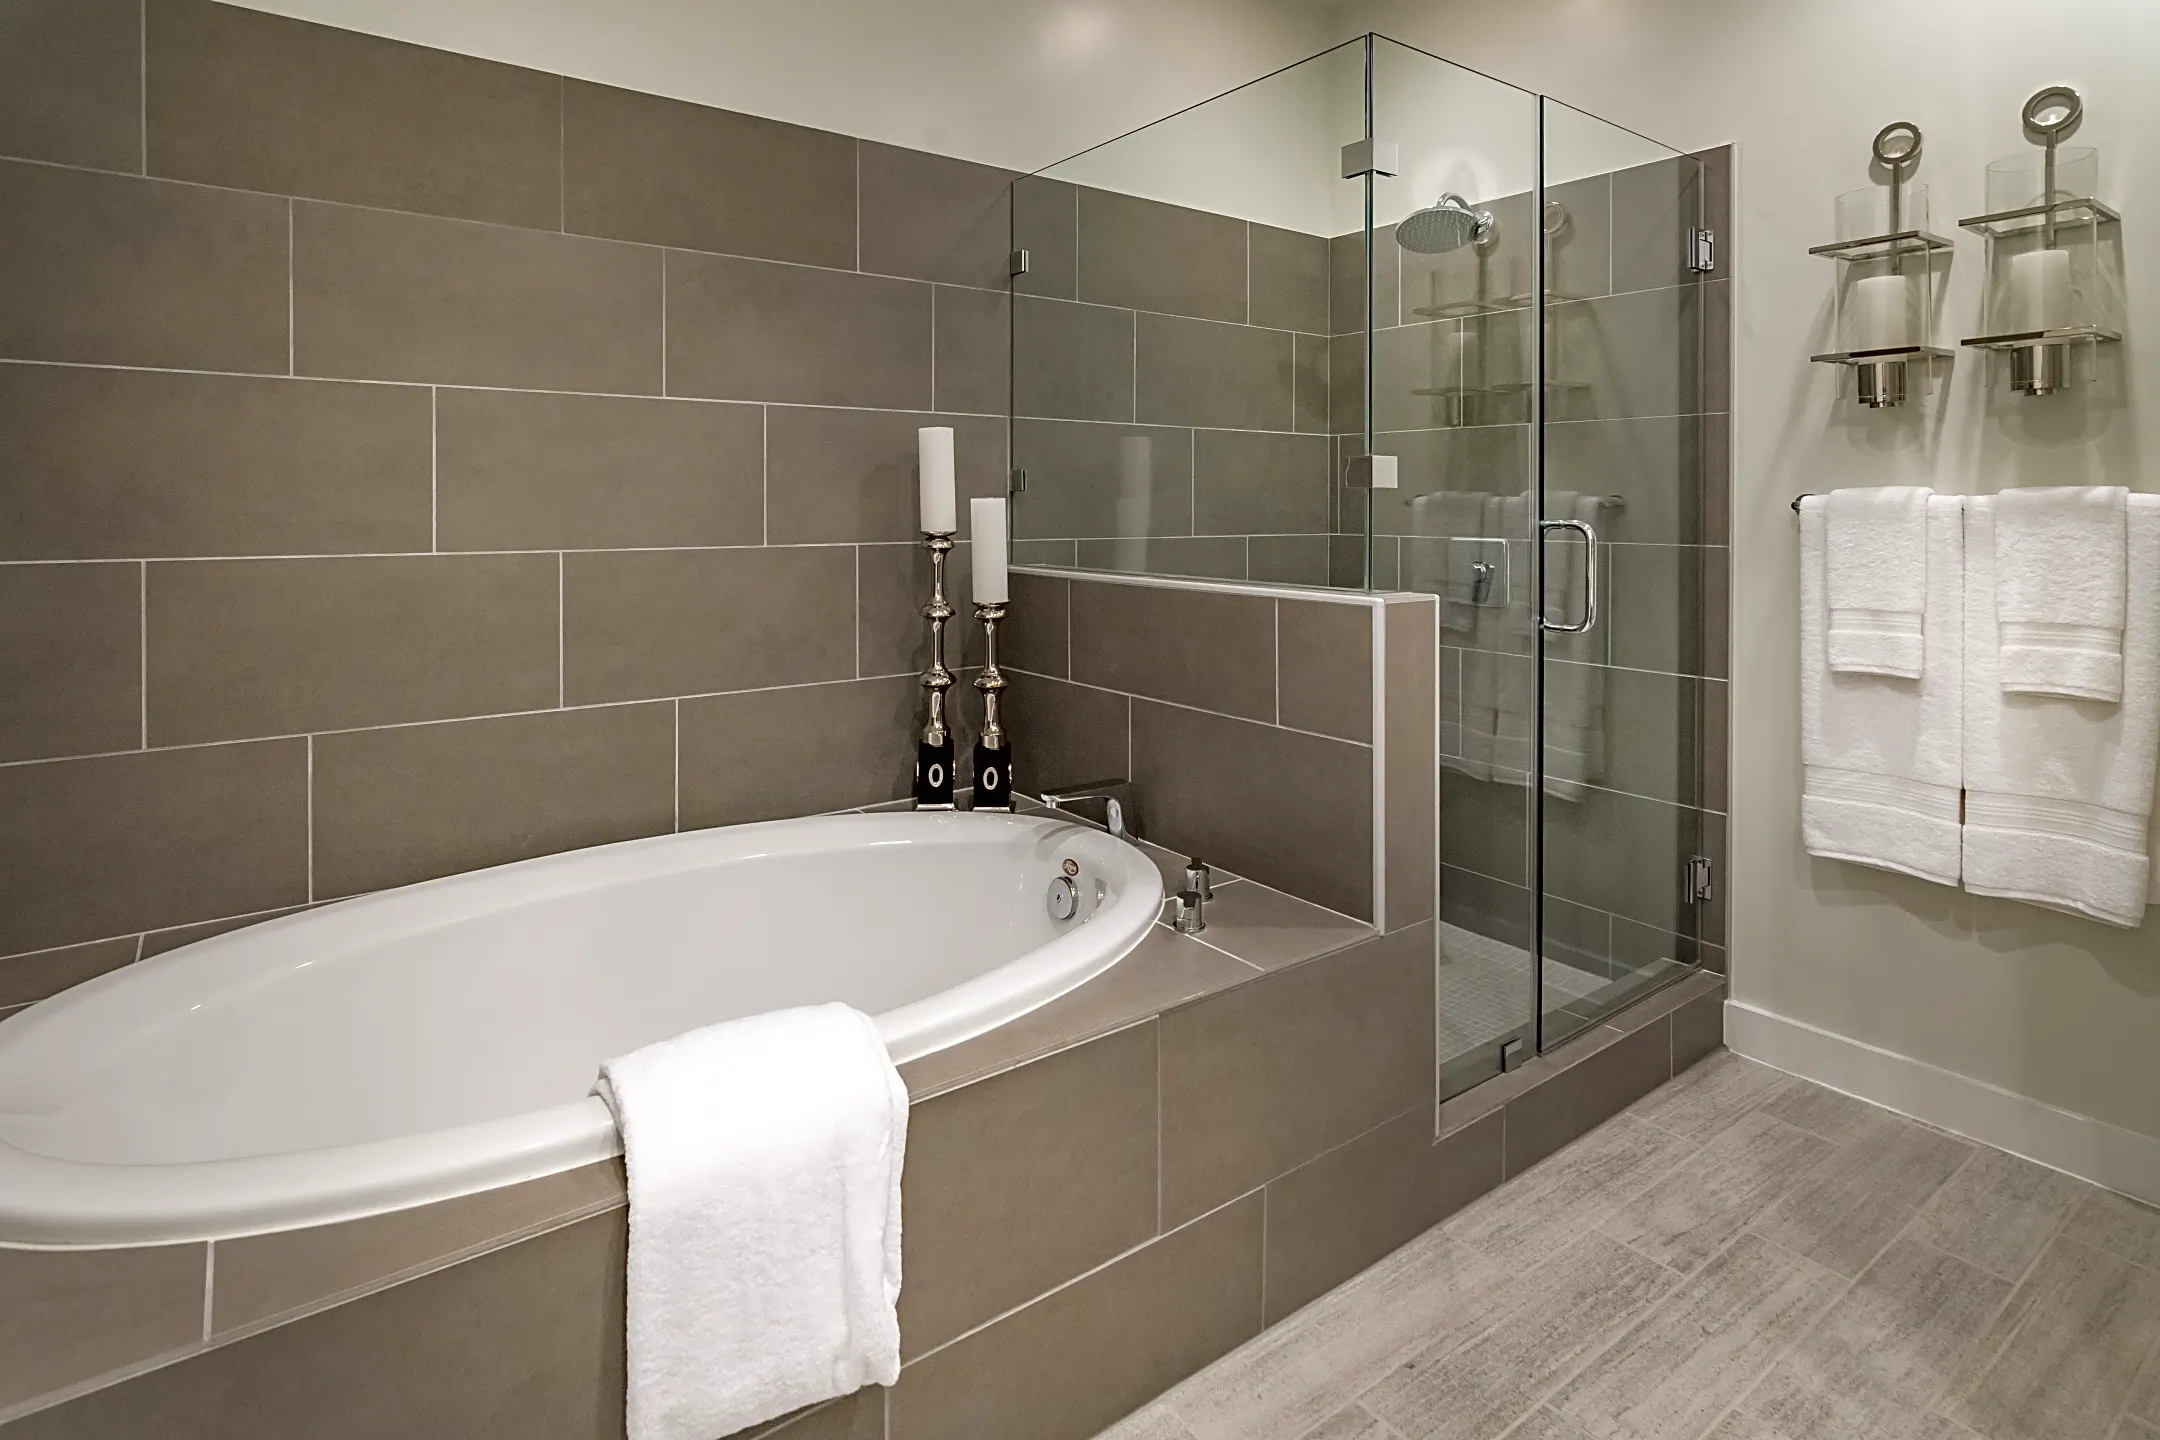 Bathroom - The Star Apartments - Houston, TX